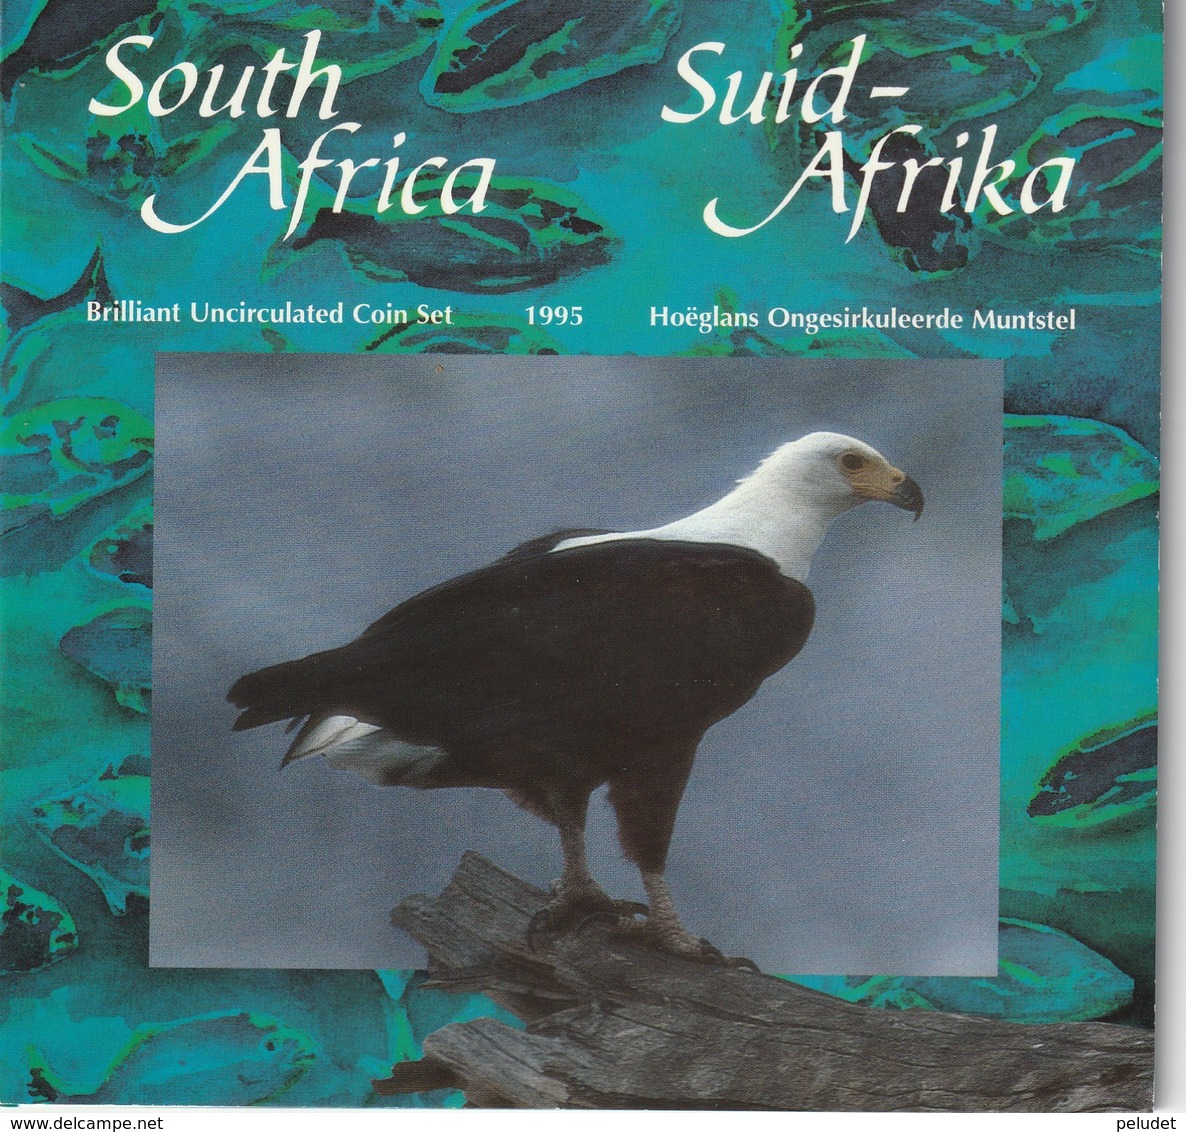 South Africa Coin Set 1995 - Sudáfrica